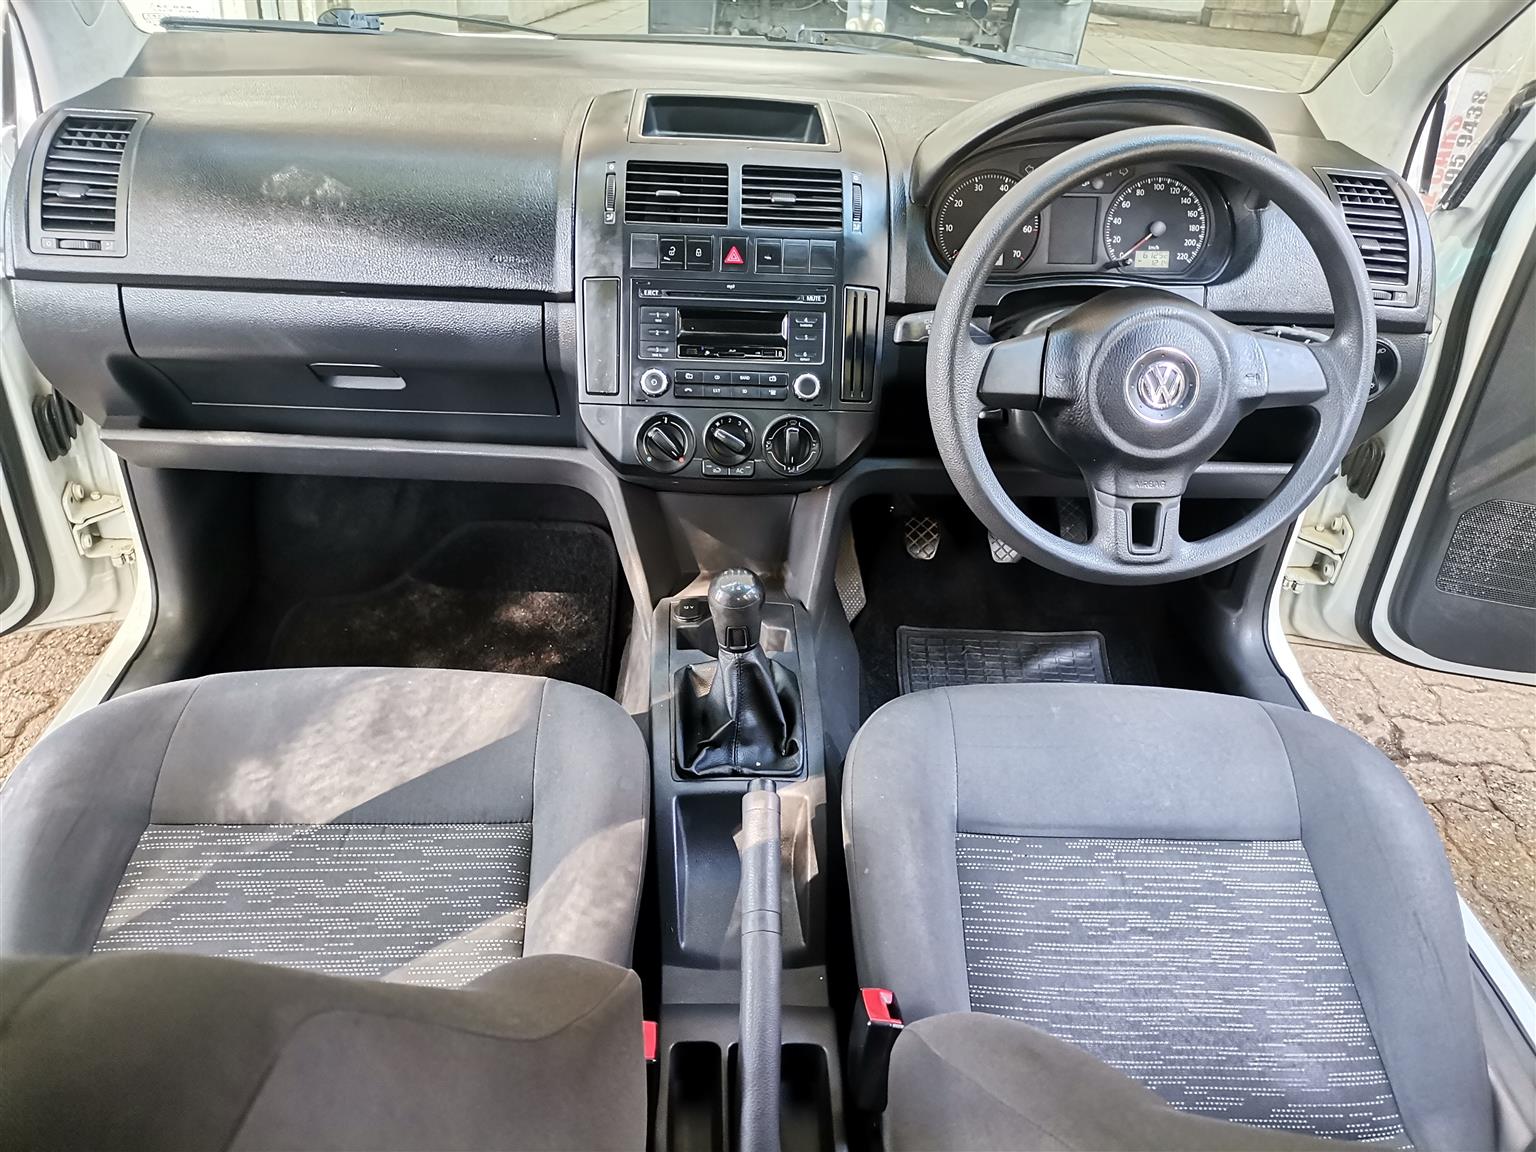 2018 VW Polo vivo sedan 1.4 MANUAL  Mechanically perfect 